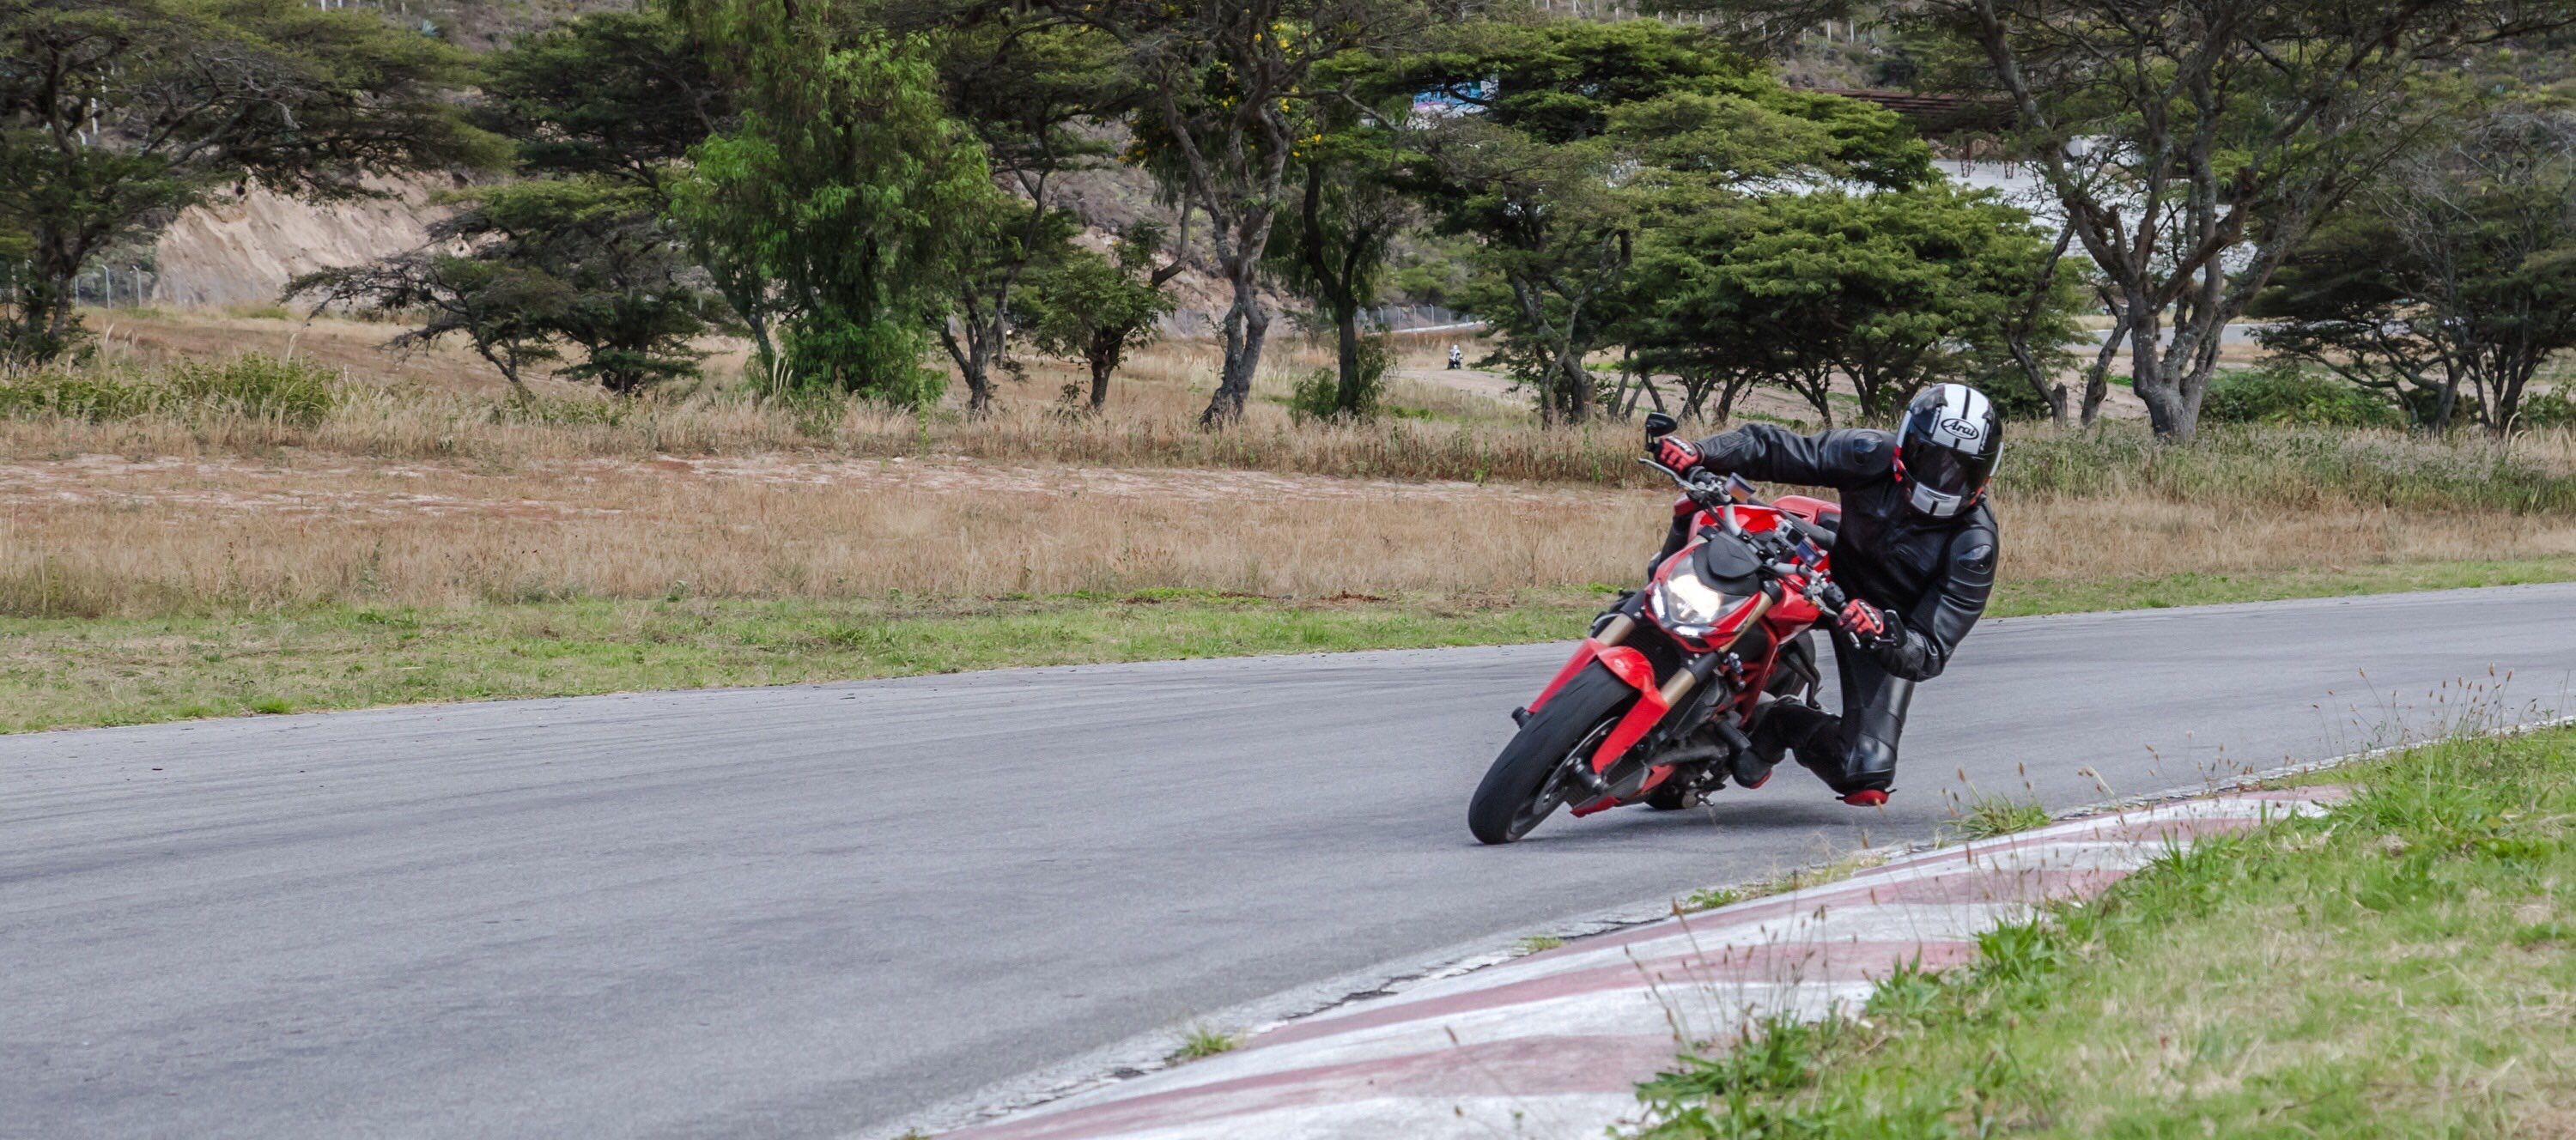  Ducati Streetfighter 848 2015